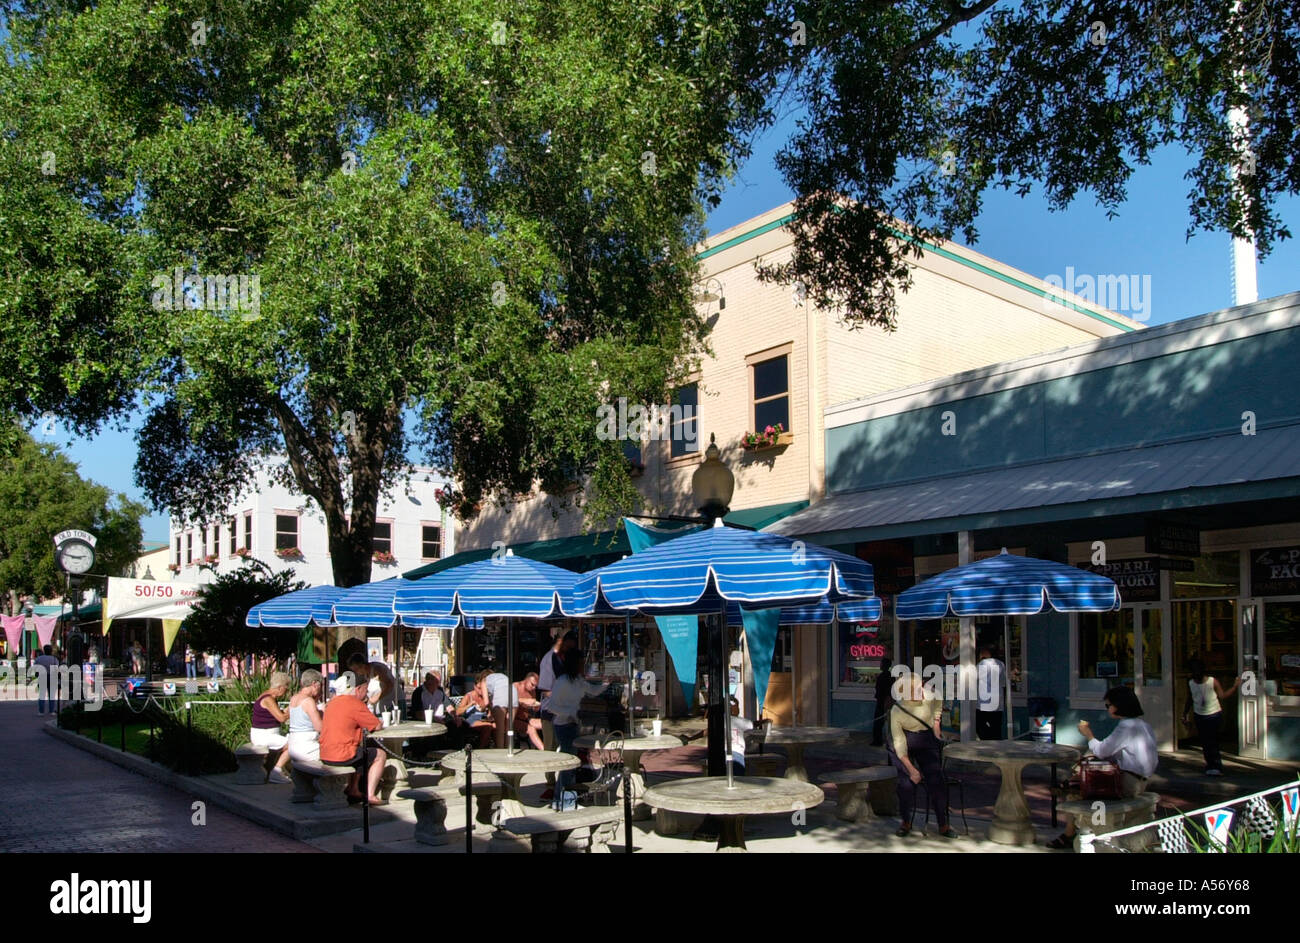 Outdoor-Cafe auf der Main Street in Old Town Kissimmee, US 192, Kissimmee, Orlando, Zentral-Florida, USA Stockfoto